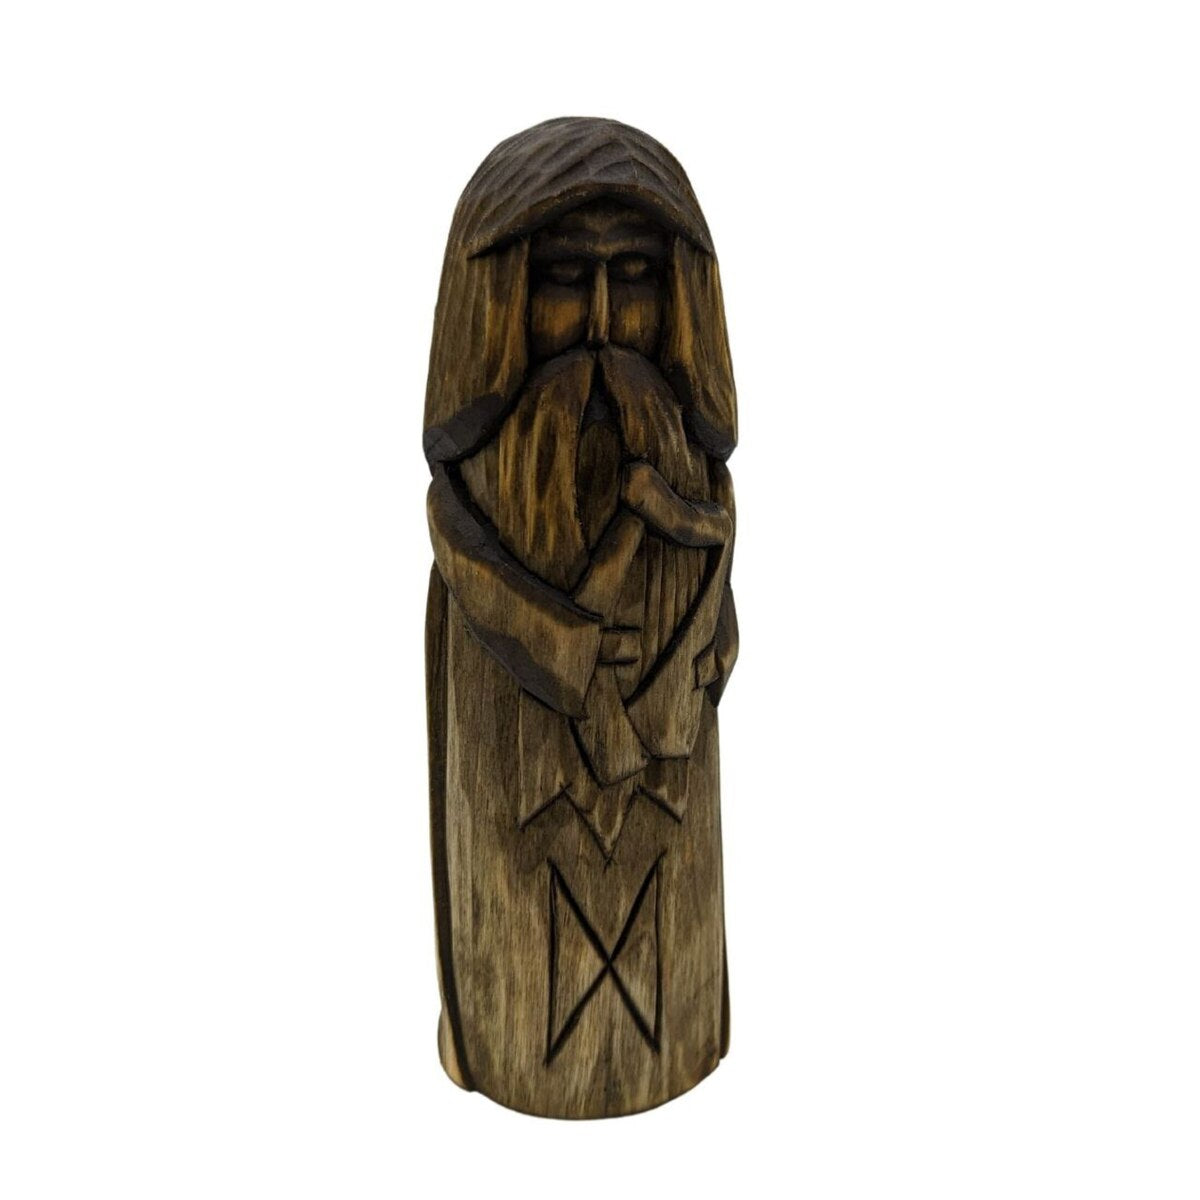 Bragi God wooden figurine   